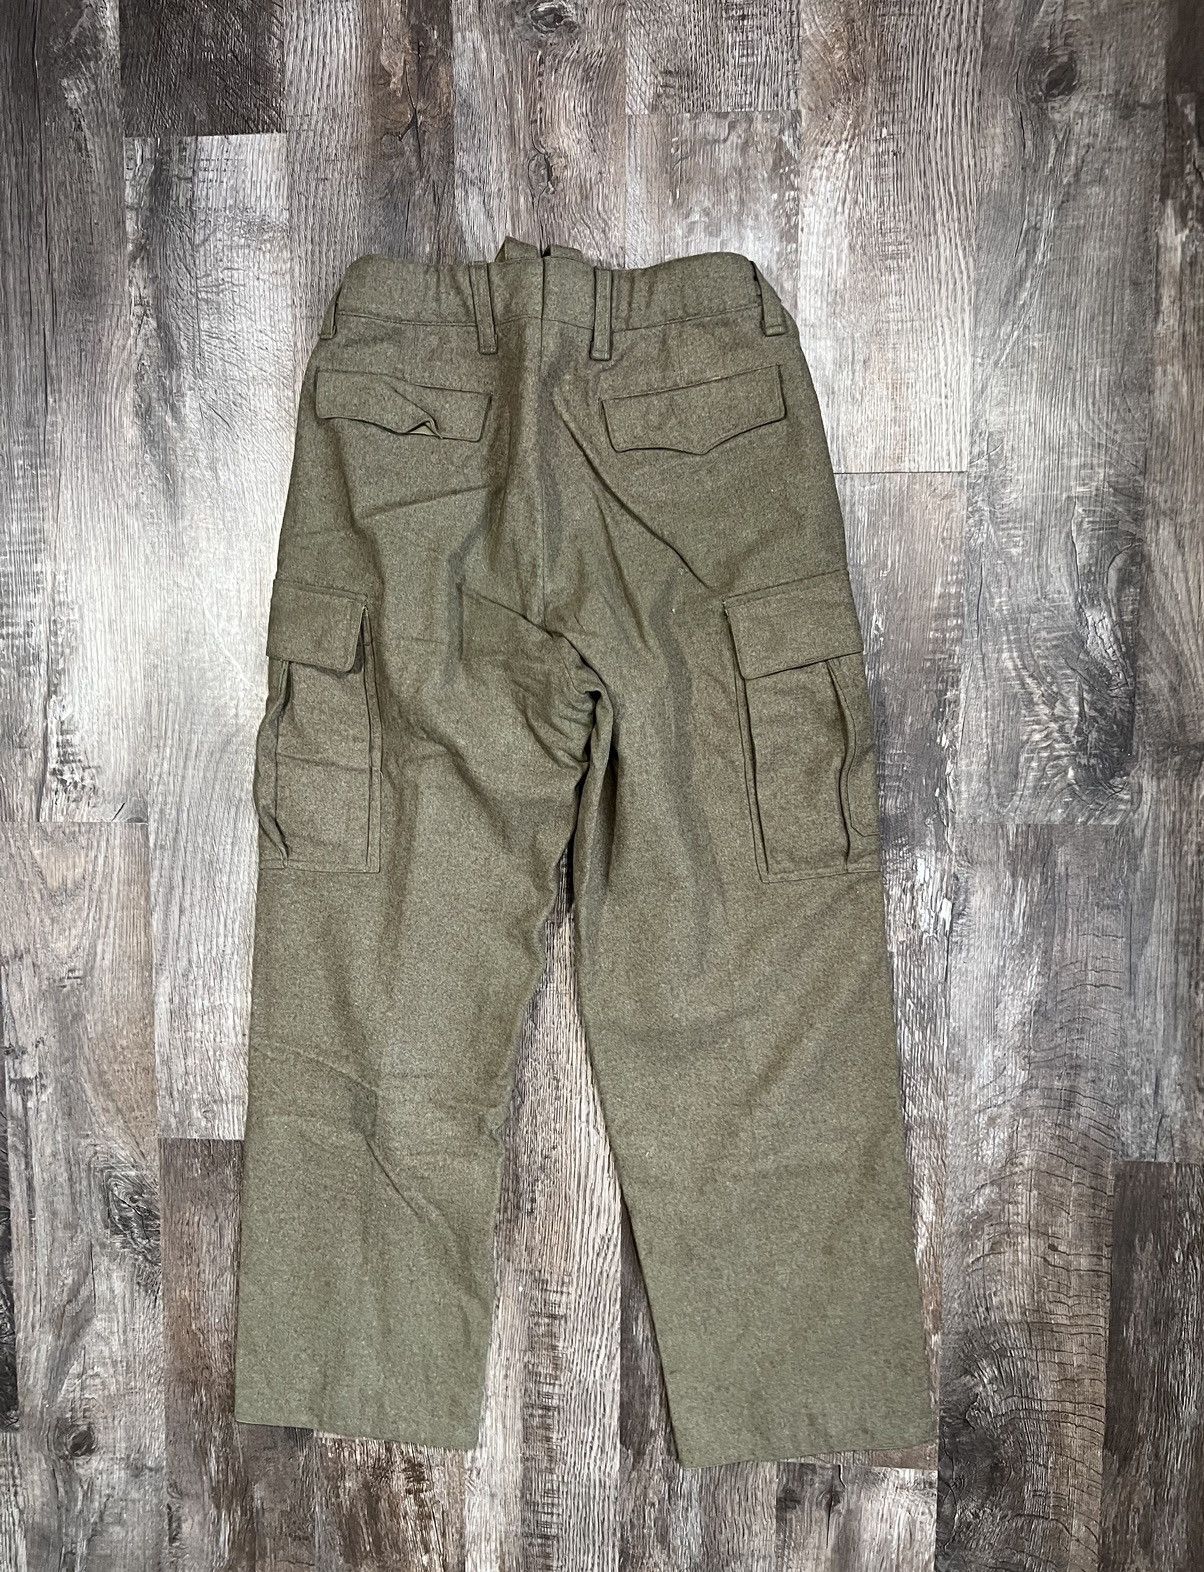 Vintage Vintage Army Wool Pants Size US 30 / EU 46 - 3 Thumbnail